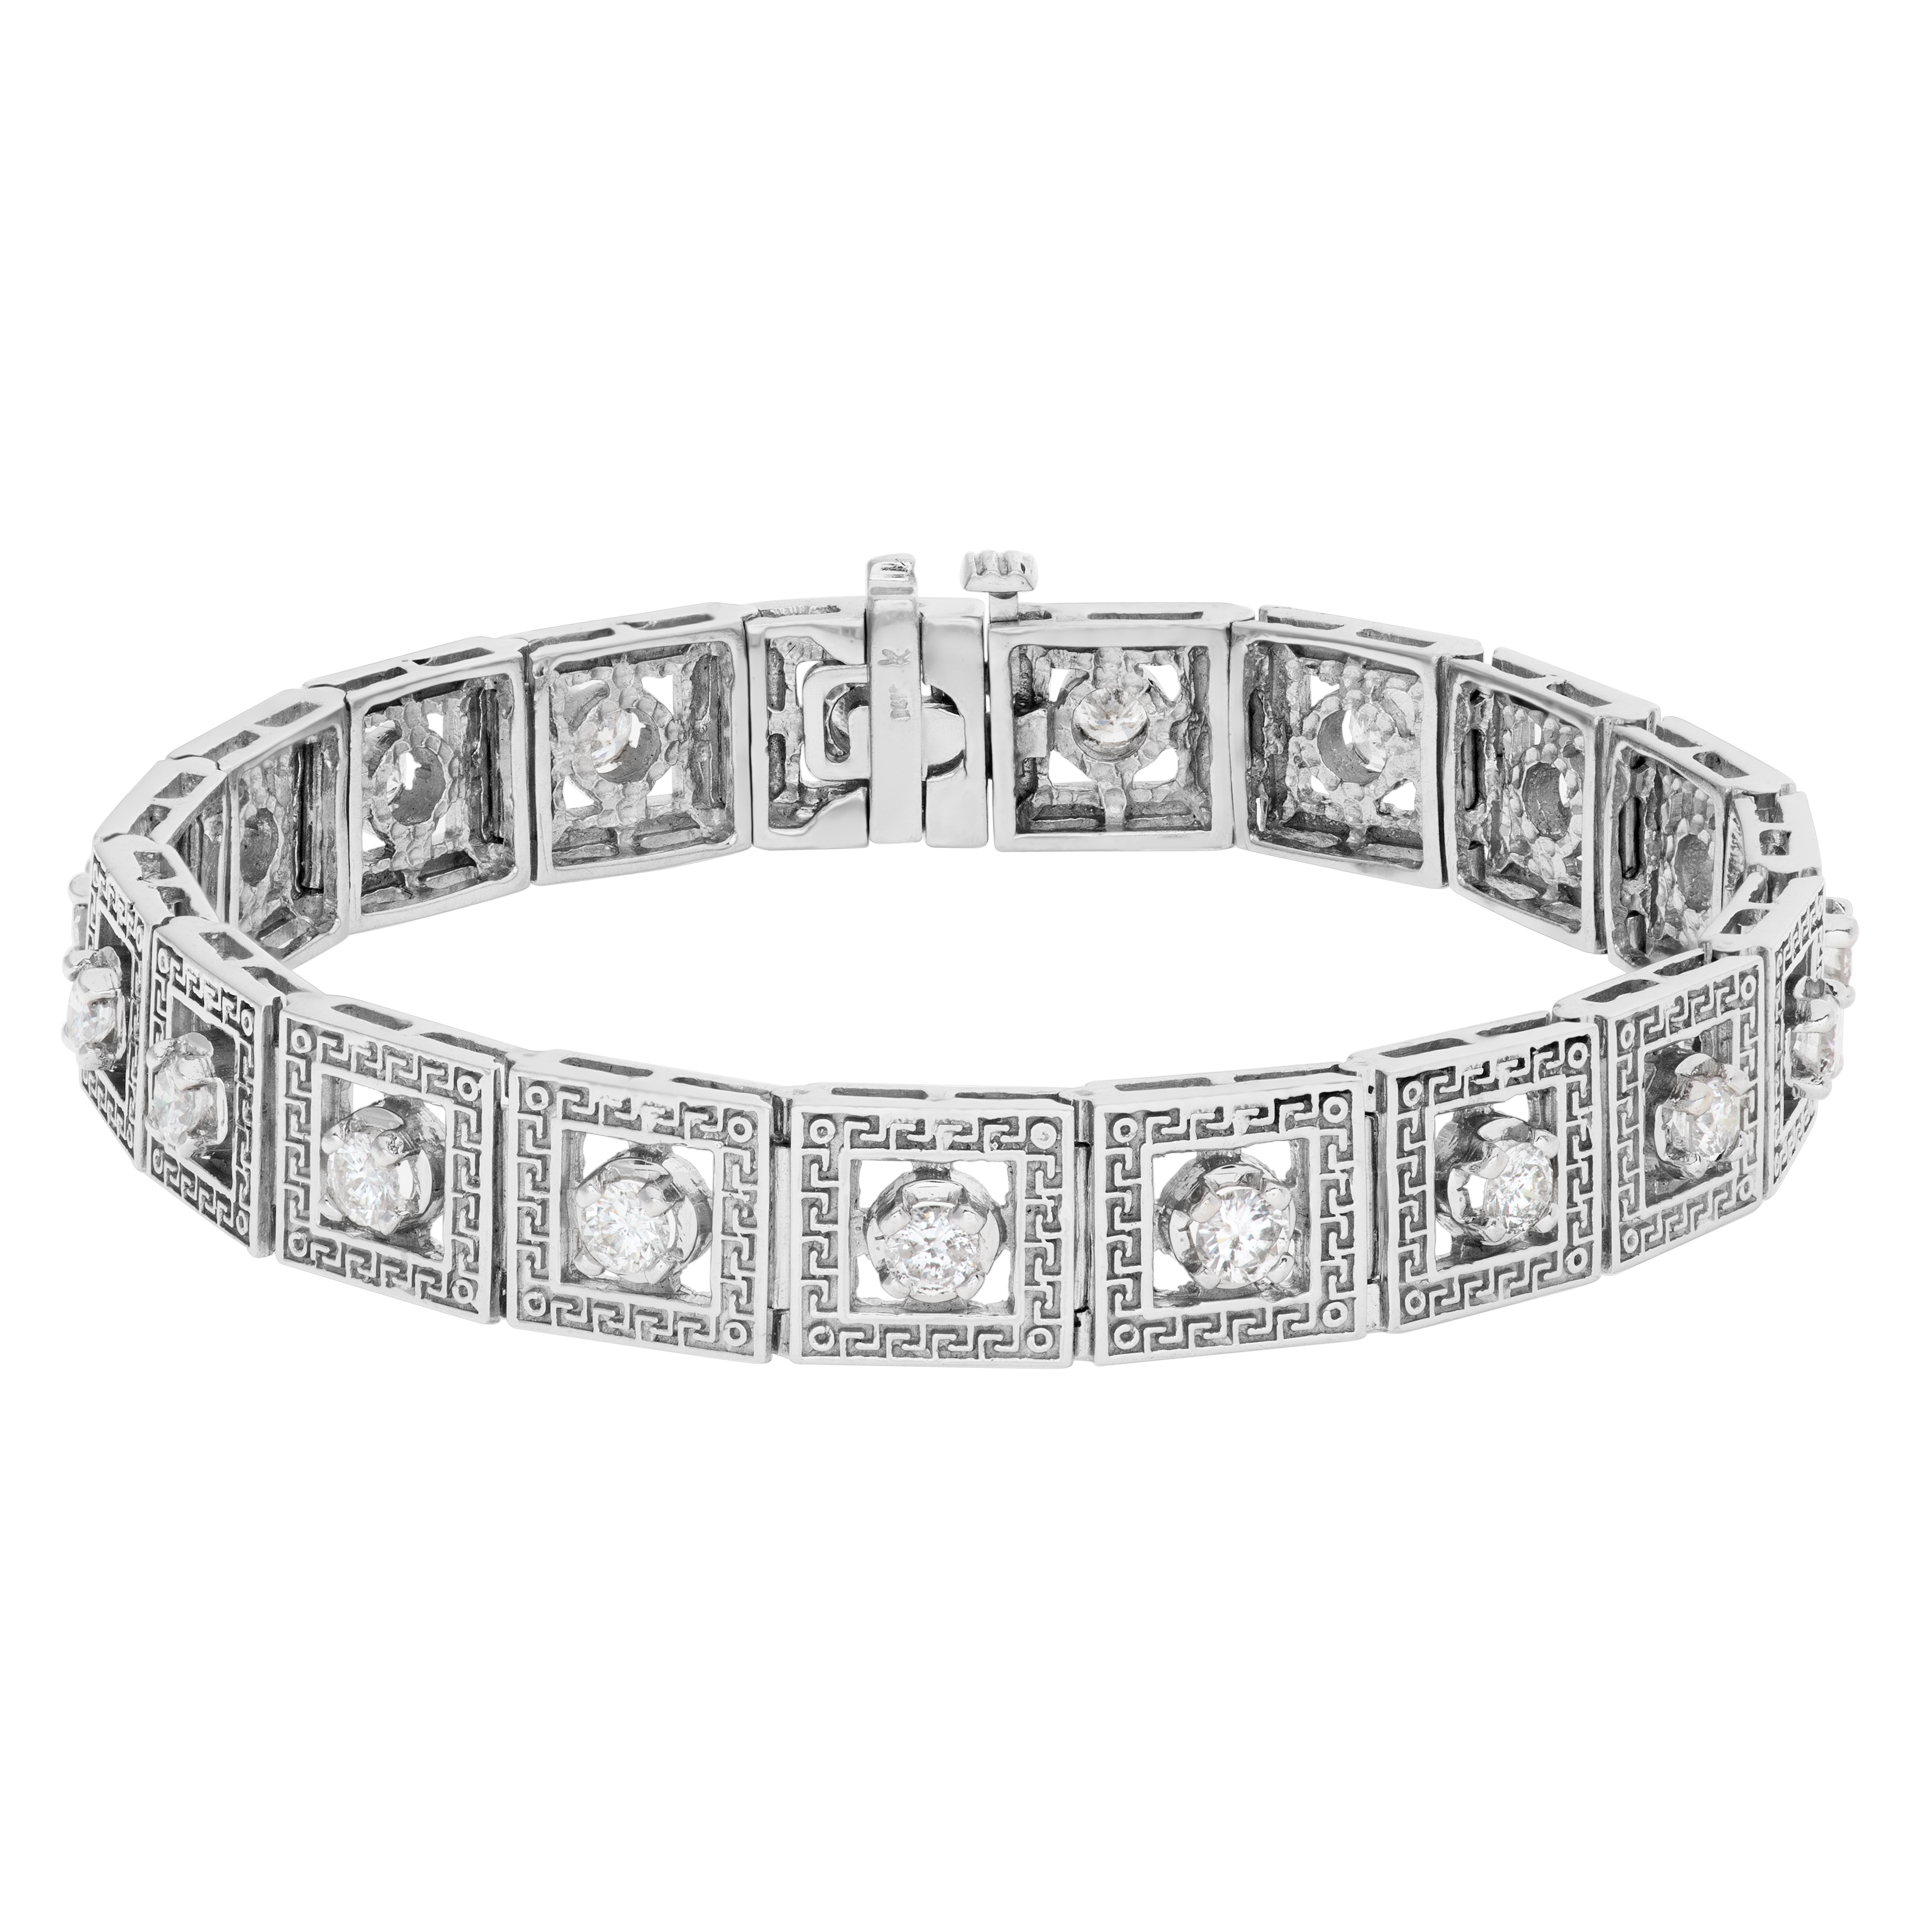 Geometric diamond link bracelet in 14k white gold. 2 carats in white clean diamonds image 1